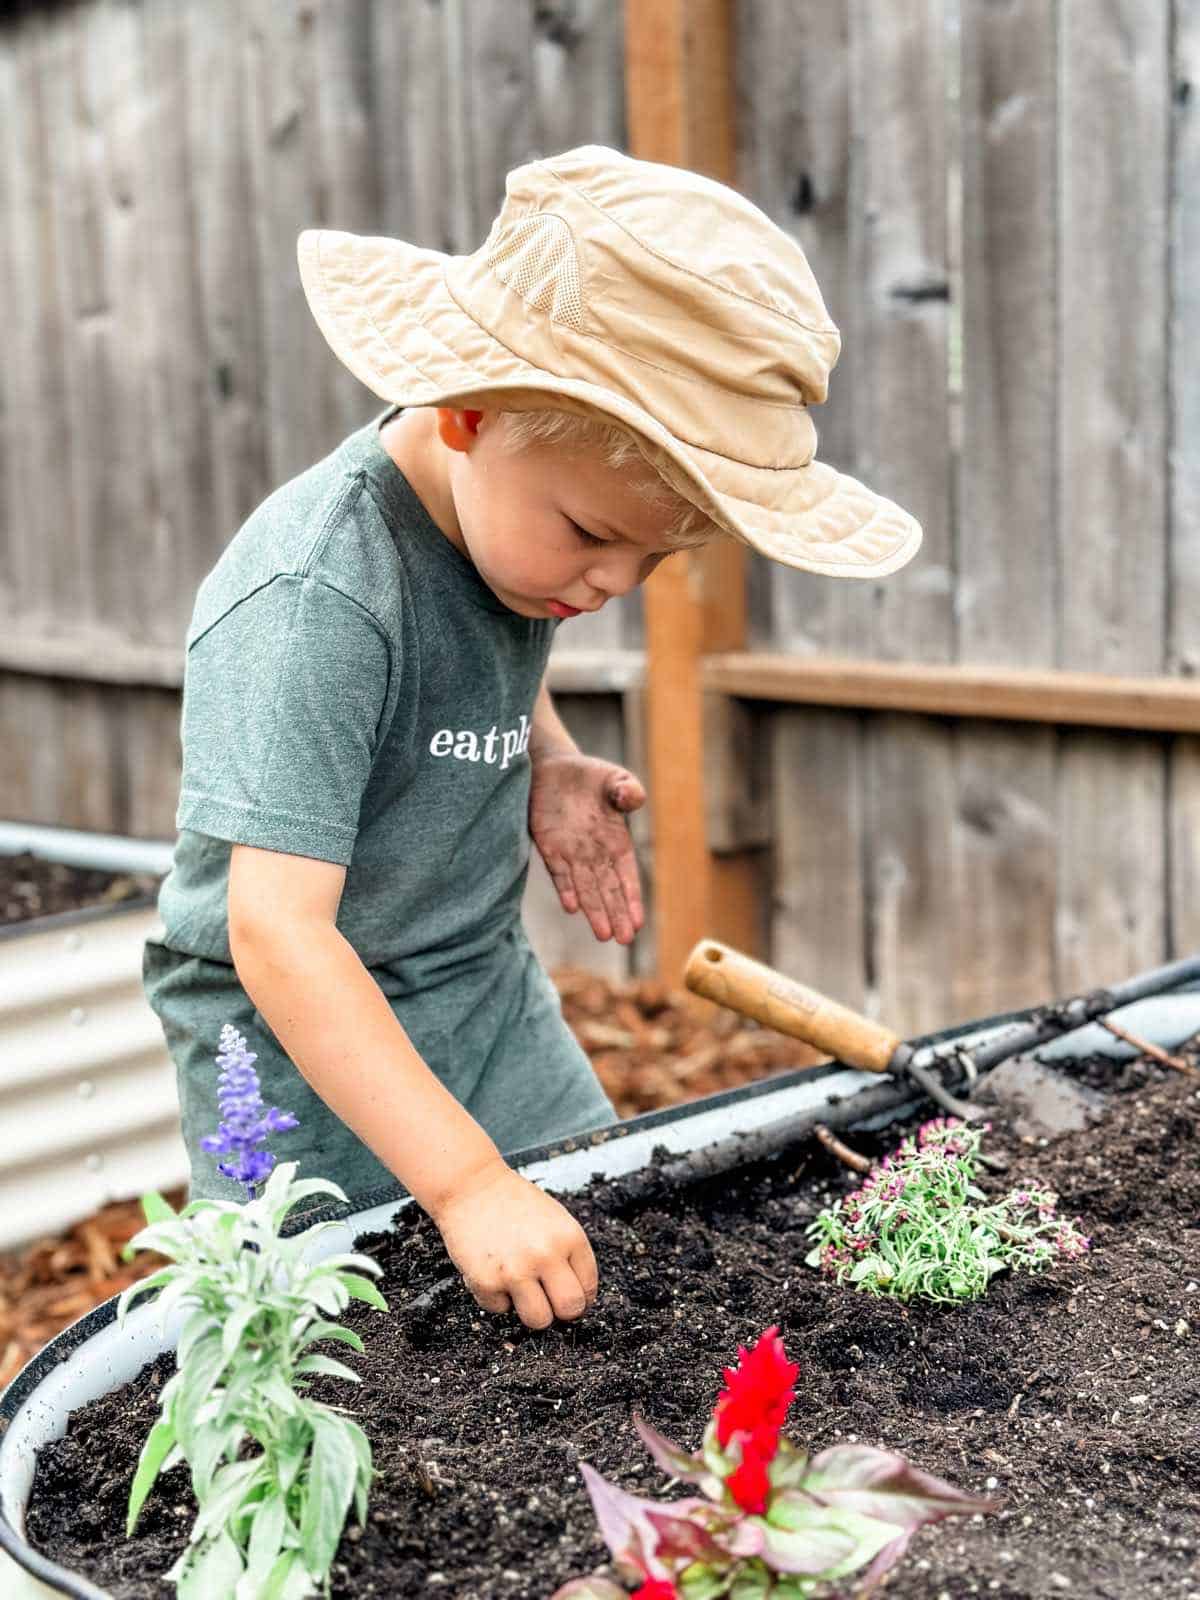 Vegan Kid Graham Miller planting seeds in his newly renovated garden and vego garden bed.